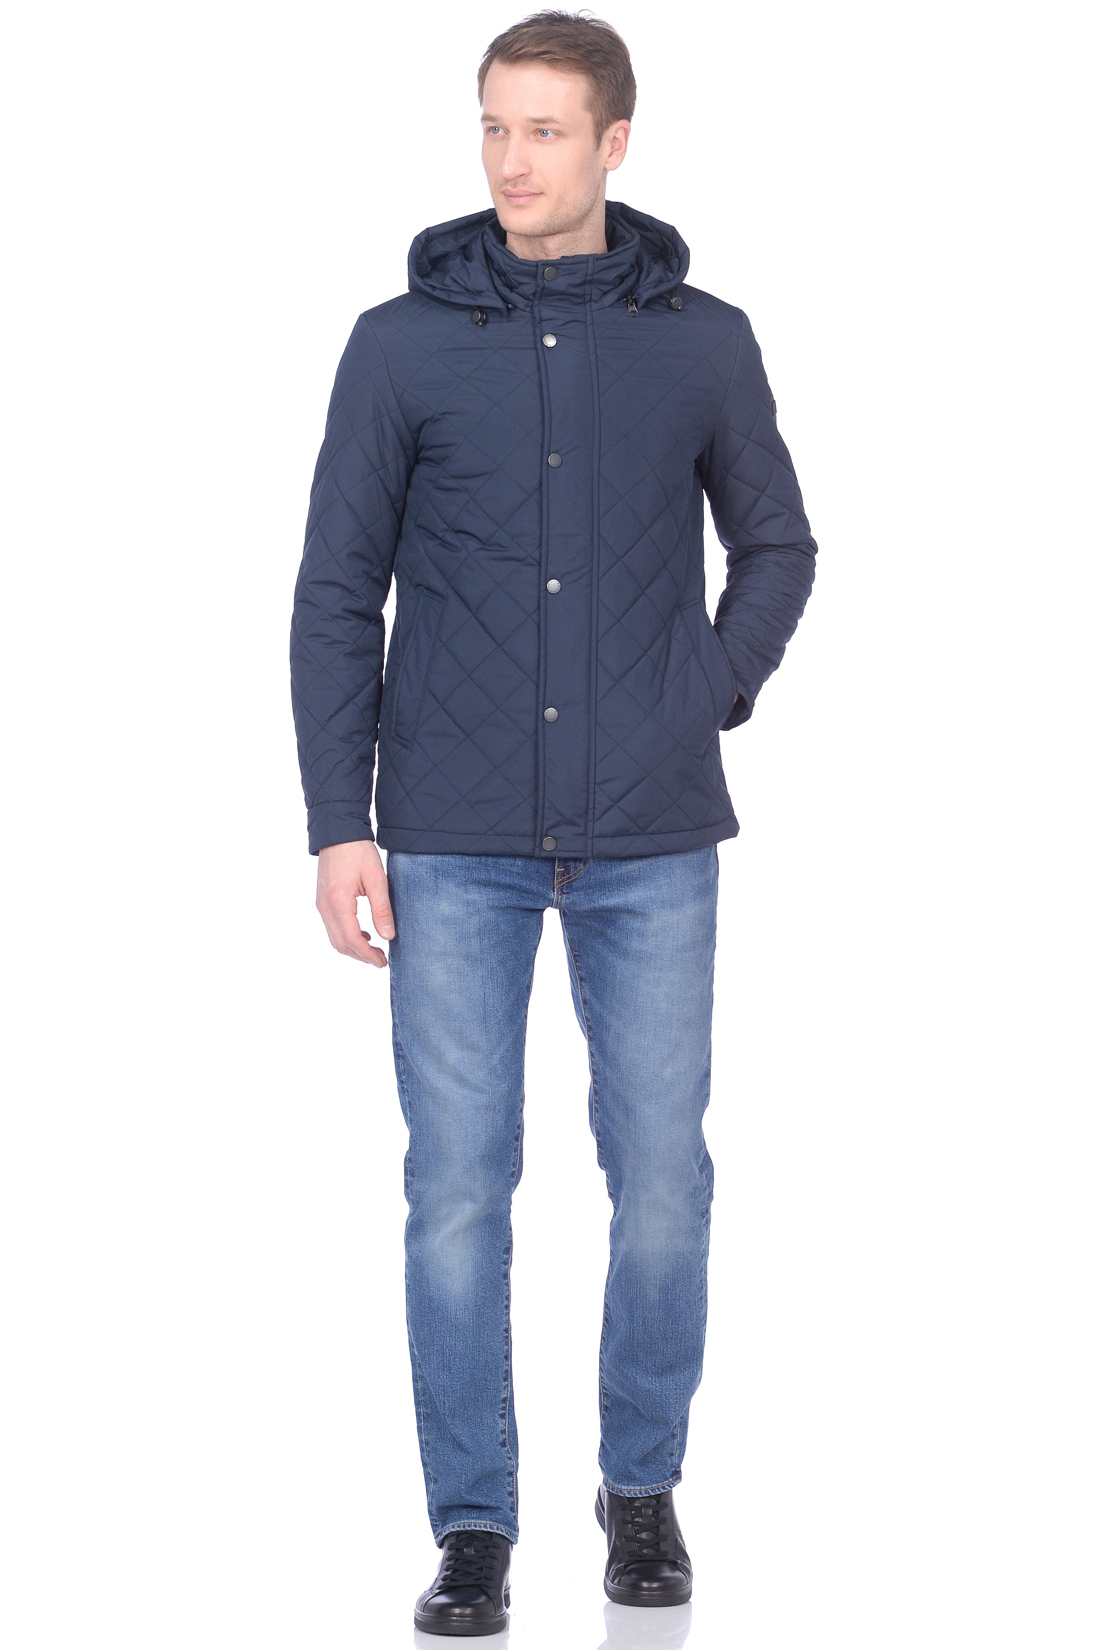 Стёганая куртка с капюшоном (арт. baon B539004), размер XXL, цвет синий Стёганая куртка с капюшоном (арт. baon B539004) - фото 2